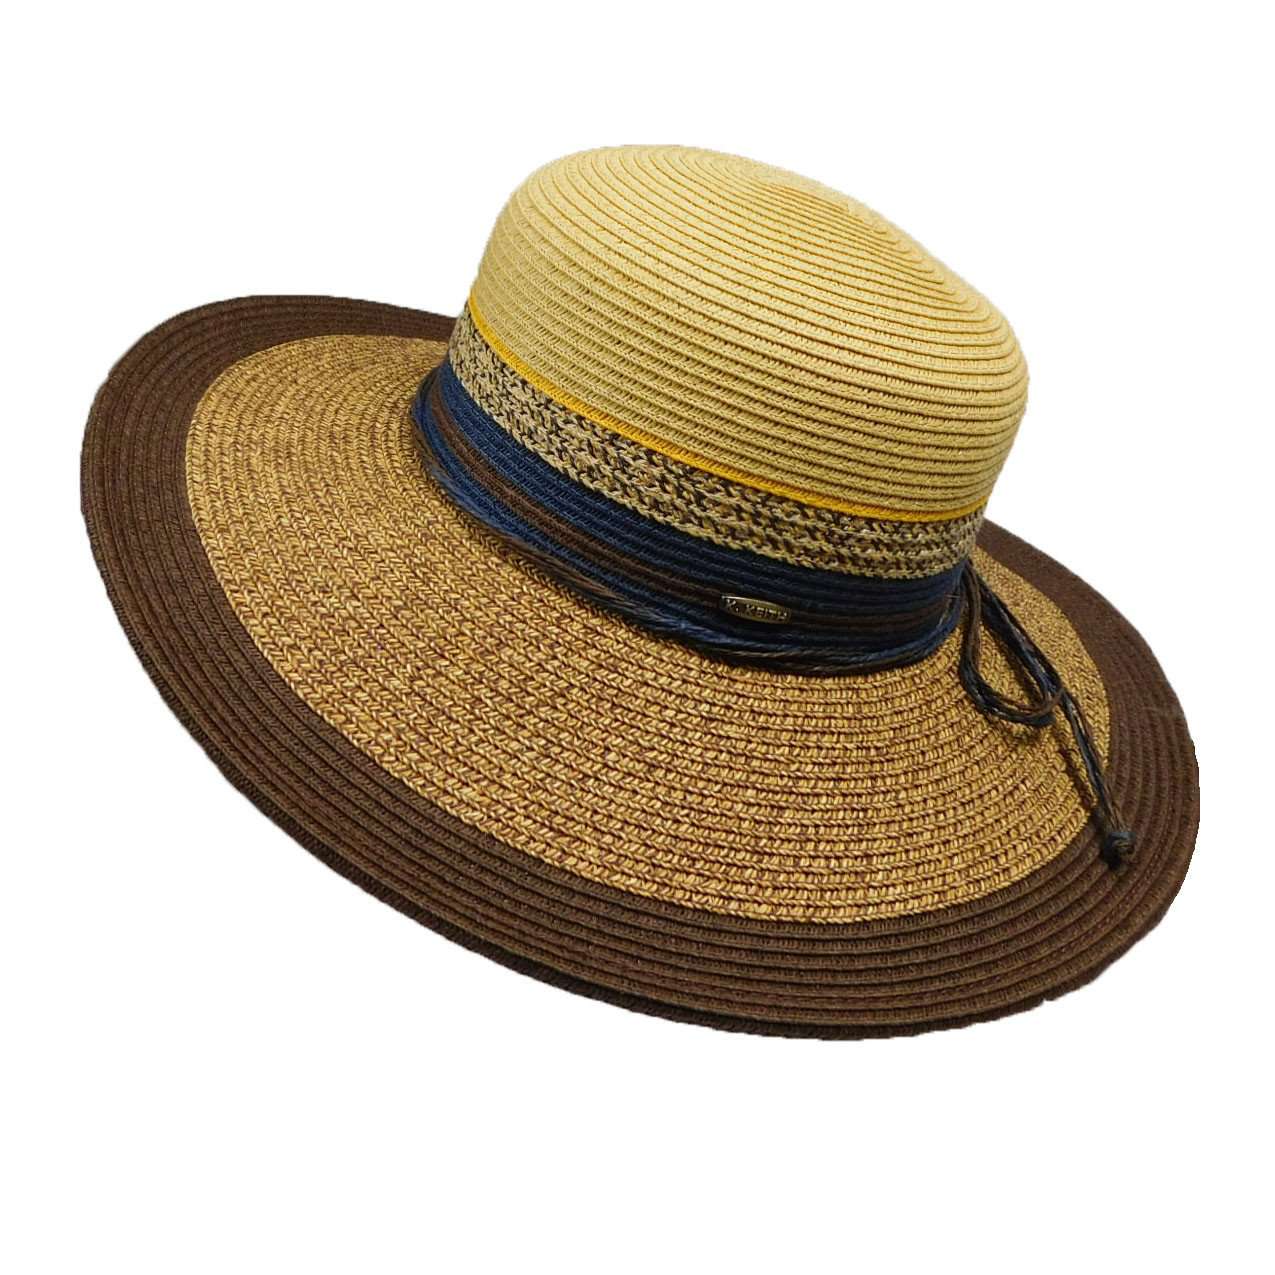 Karen Keith Multi Tone Sun Hat Floppy Hat Great hats by Karen Keith WSbt31BN Brown  